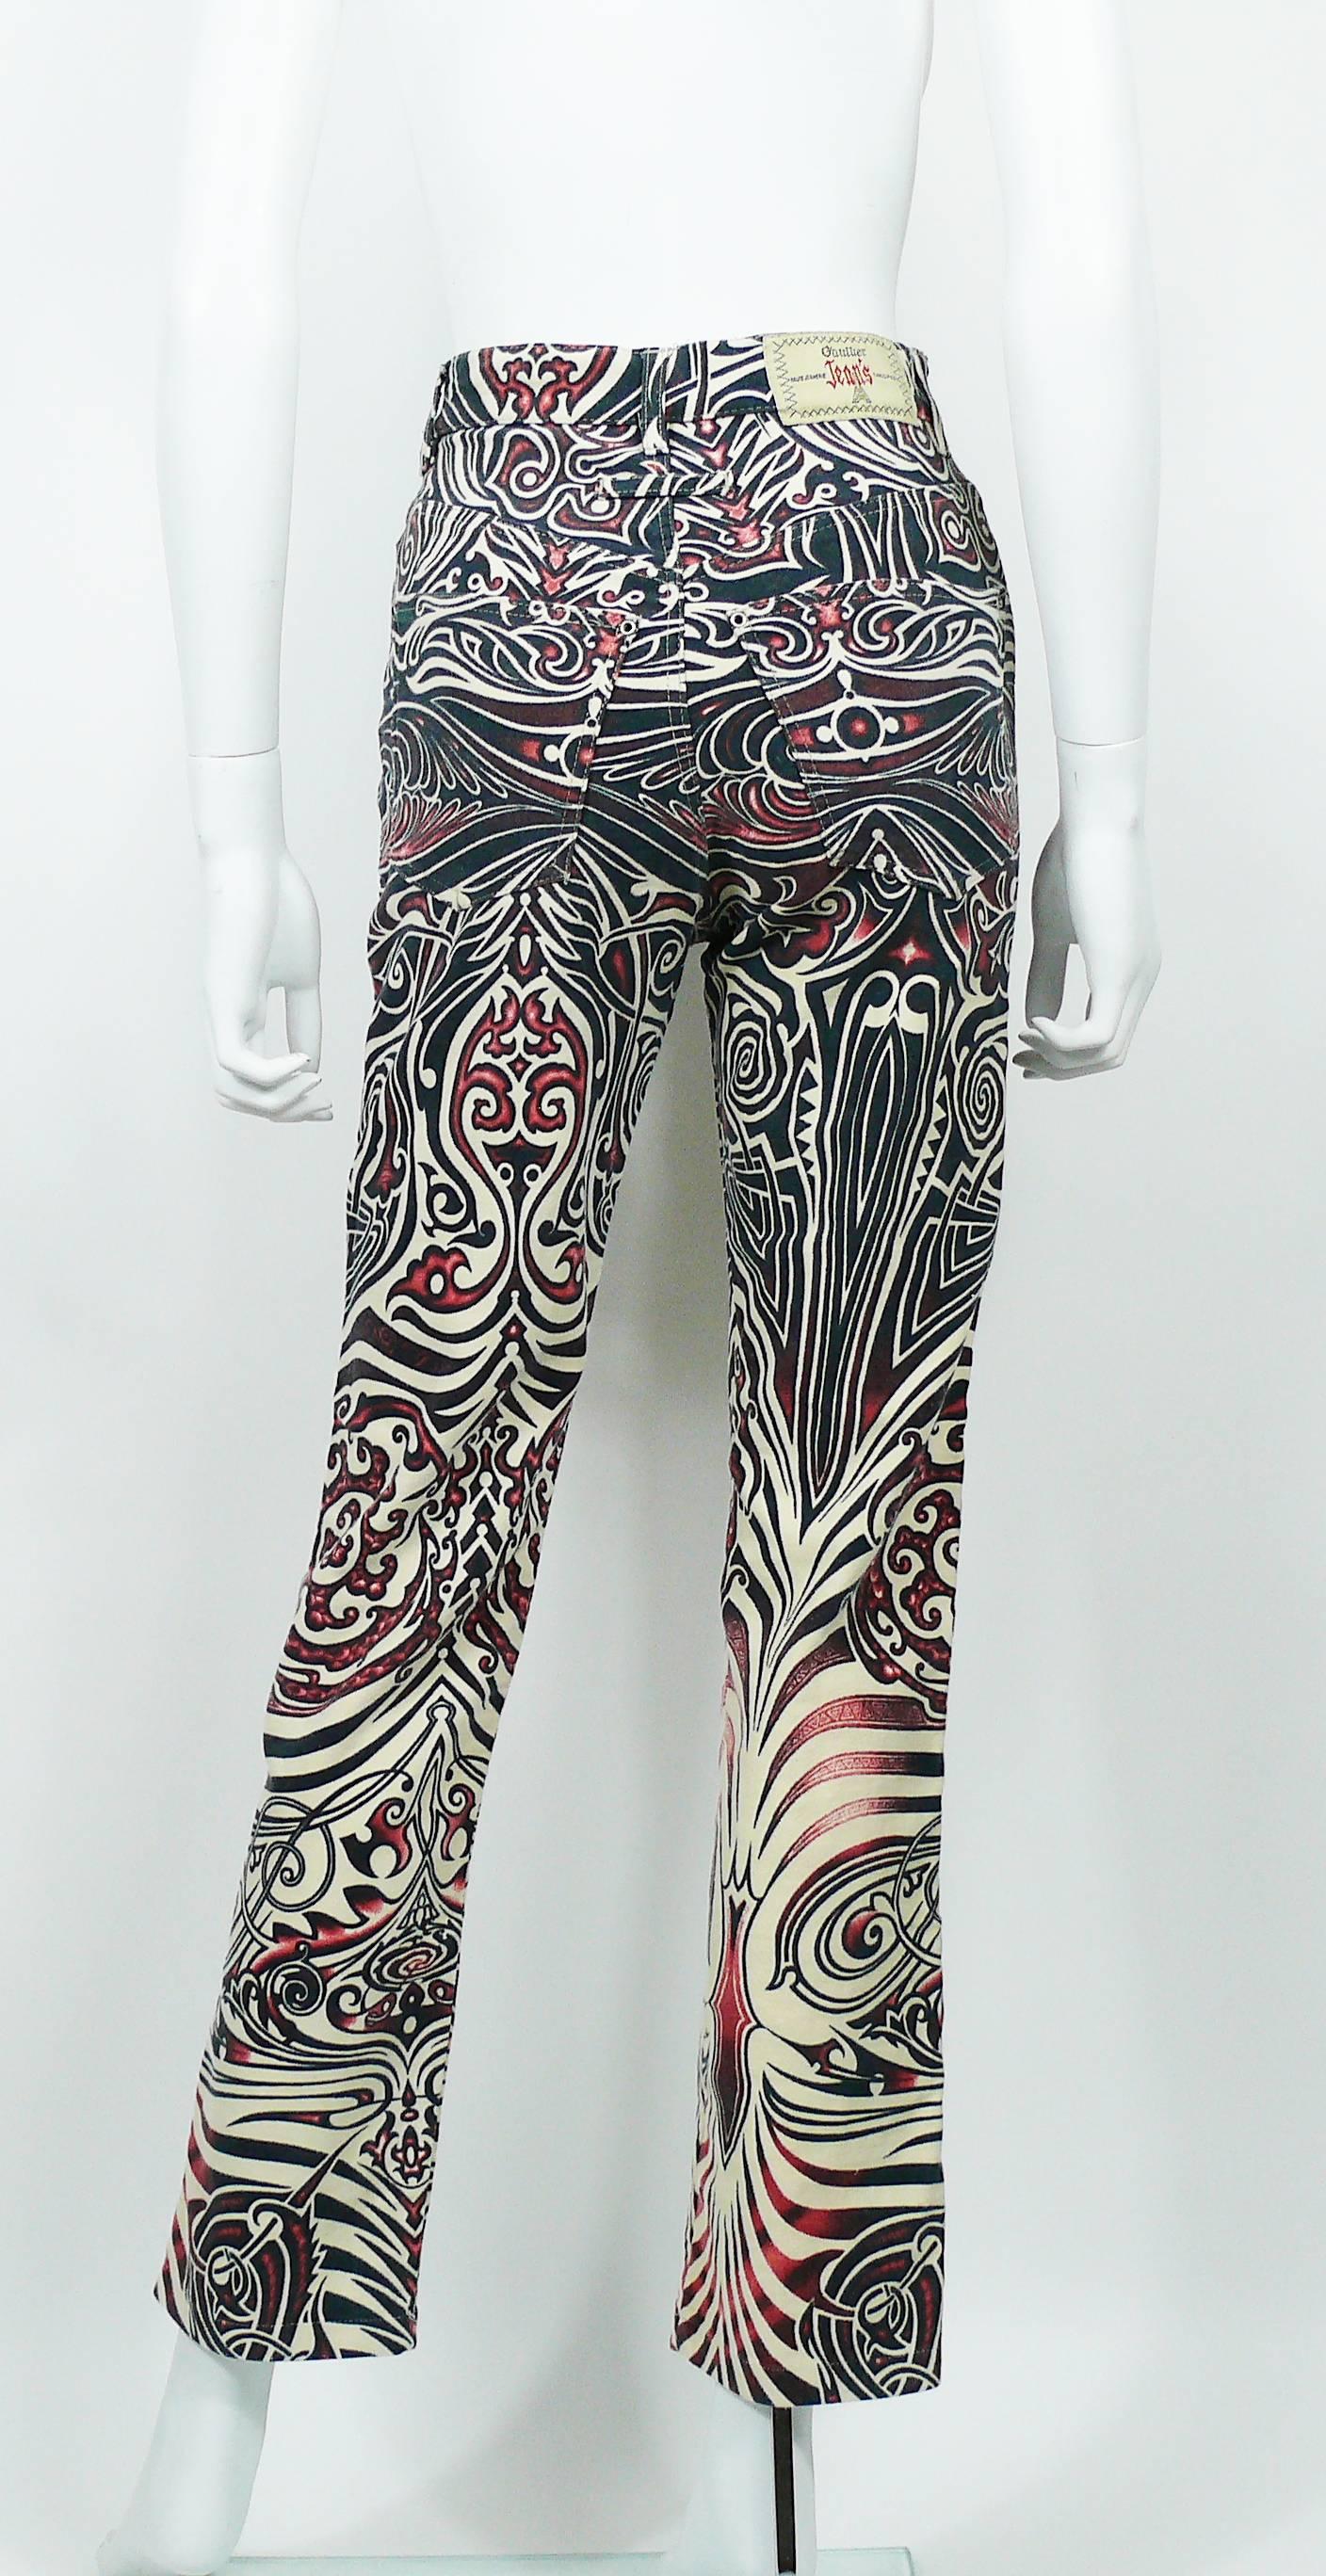 Jean Paul Gaultier Vintage Aboriginal Maori Tattoo Pants Trousers at ...